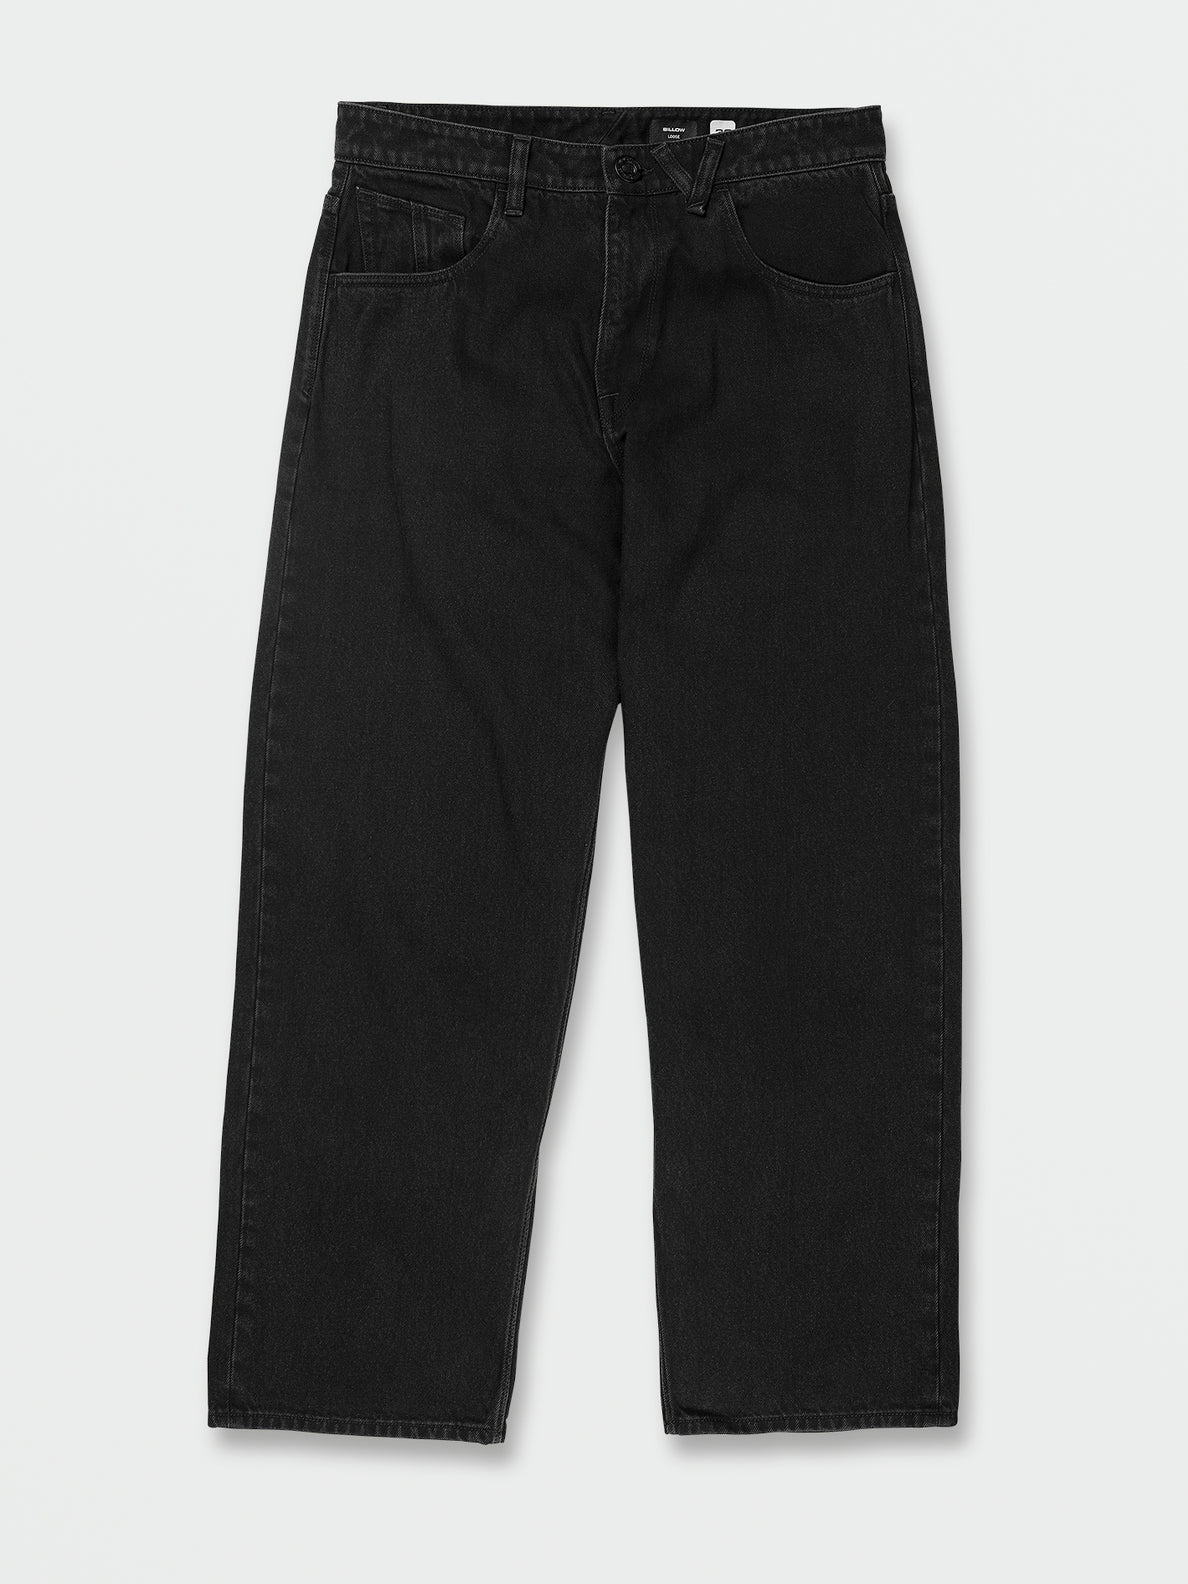 Billow Loose Fit Jeans - Black